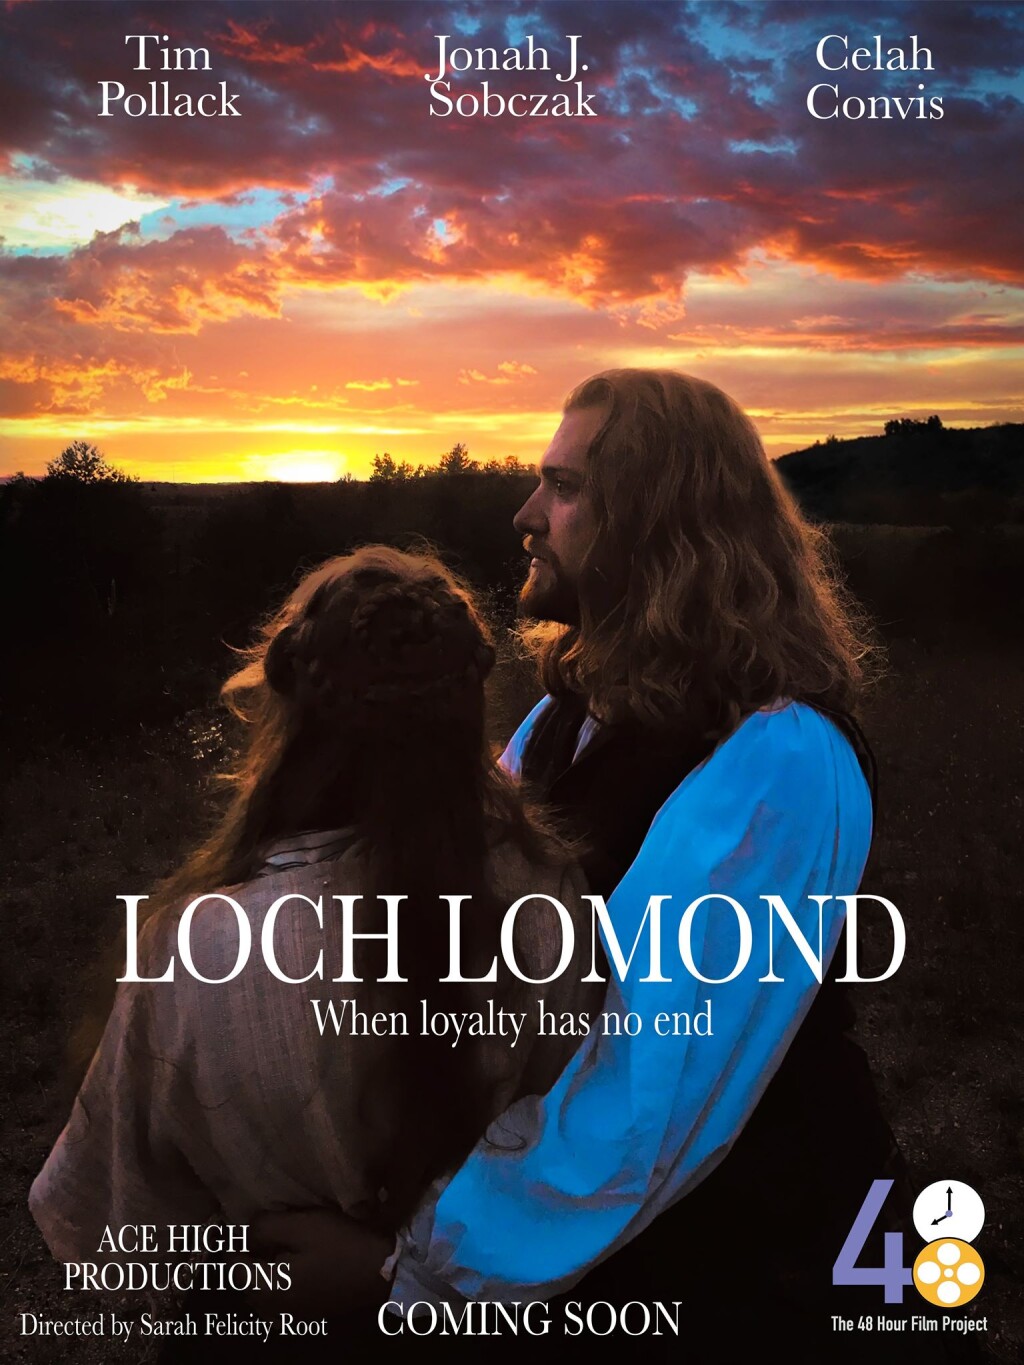 Filmposter for Loch Lomond